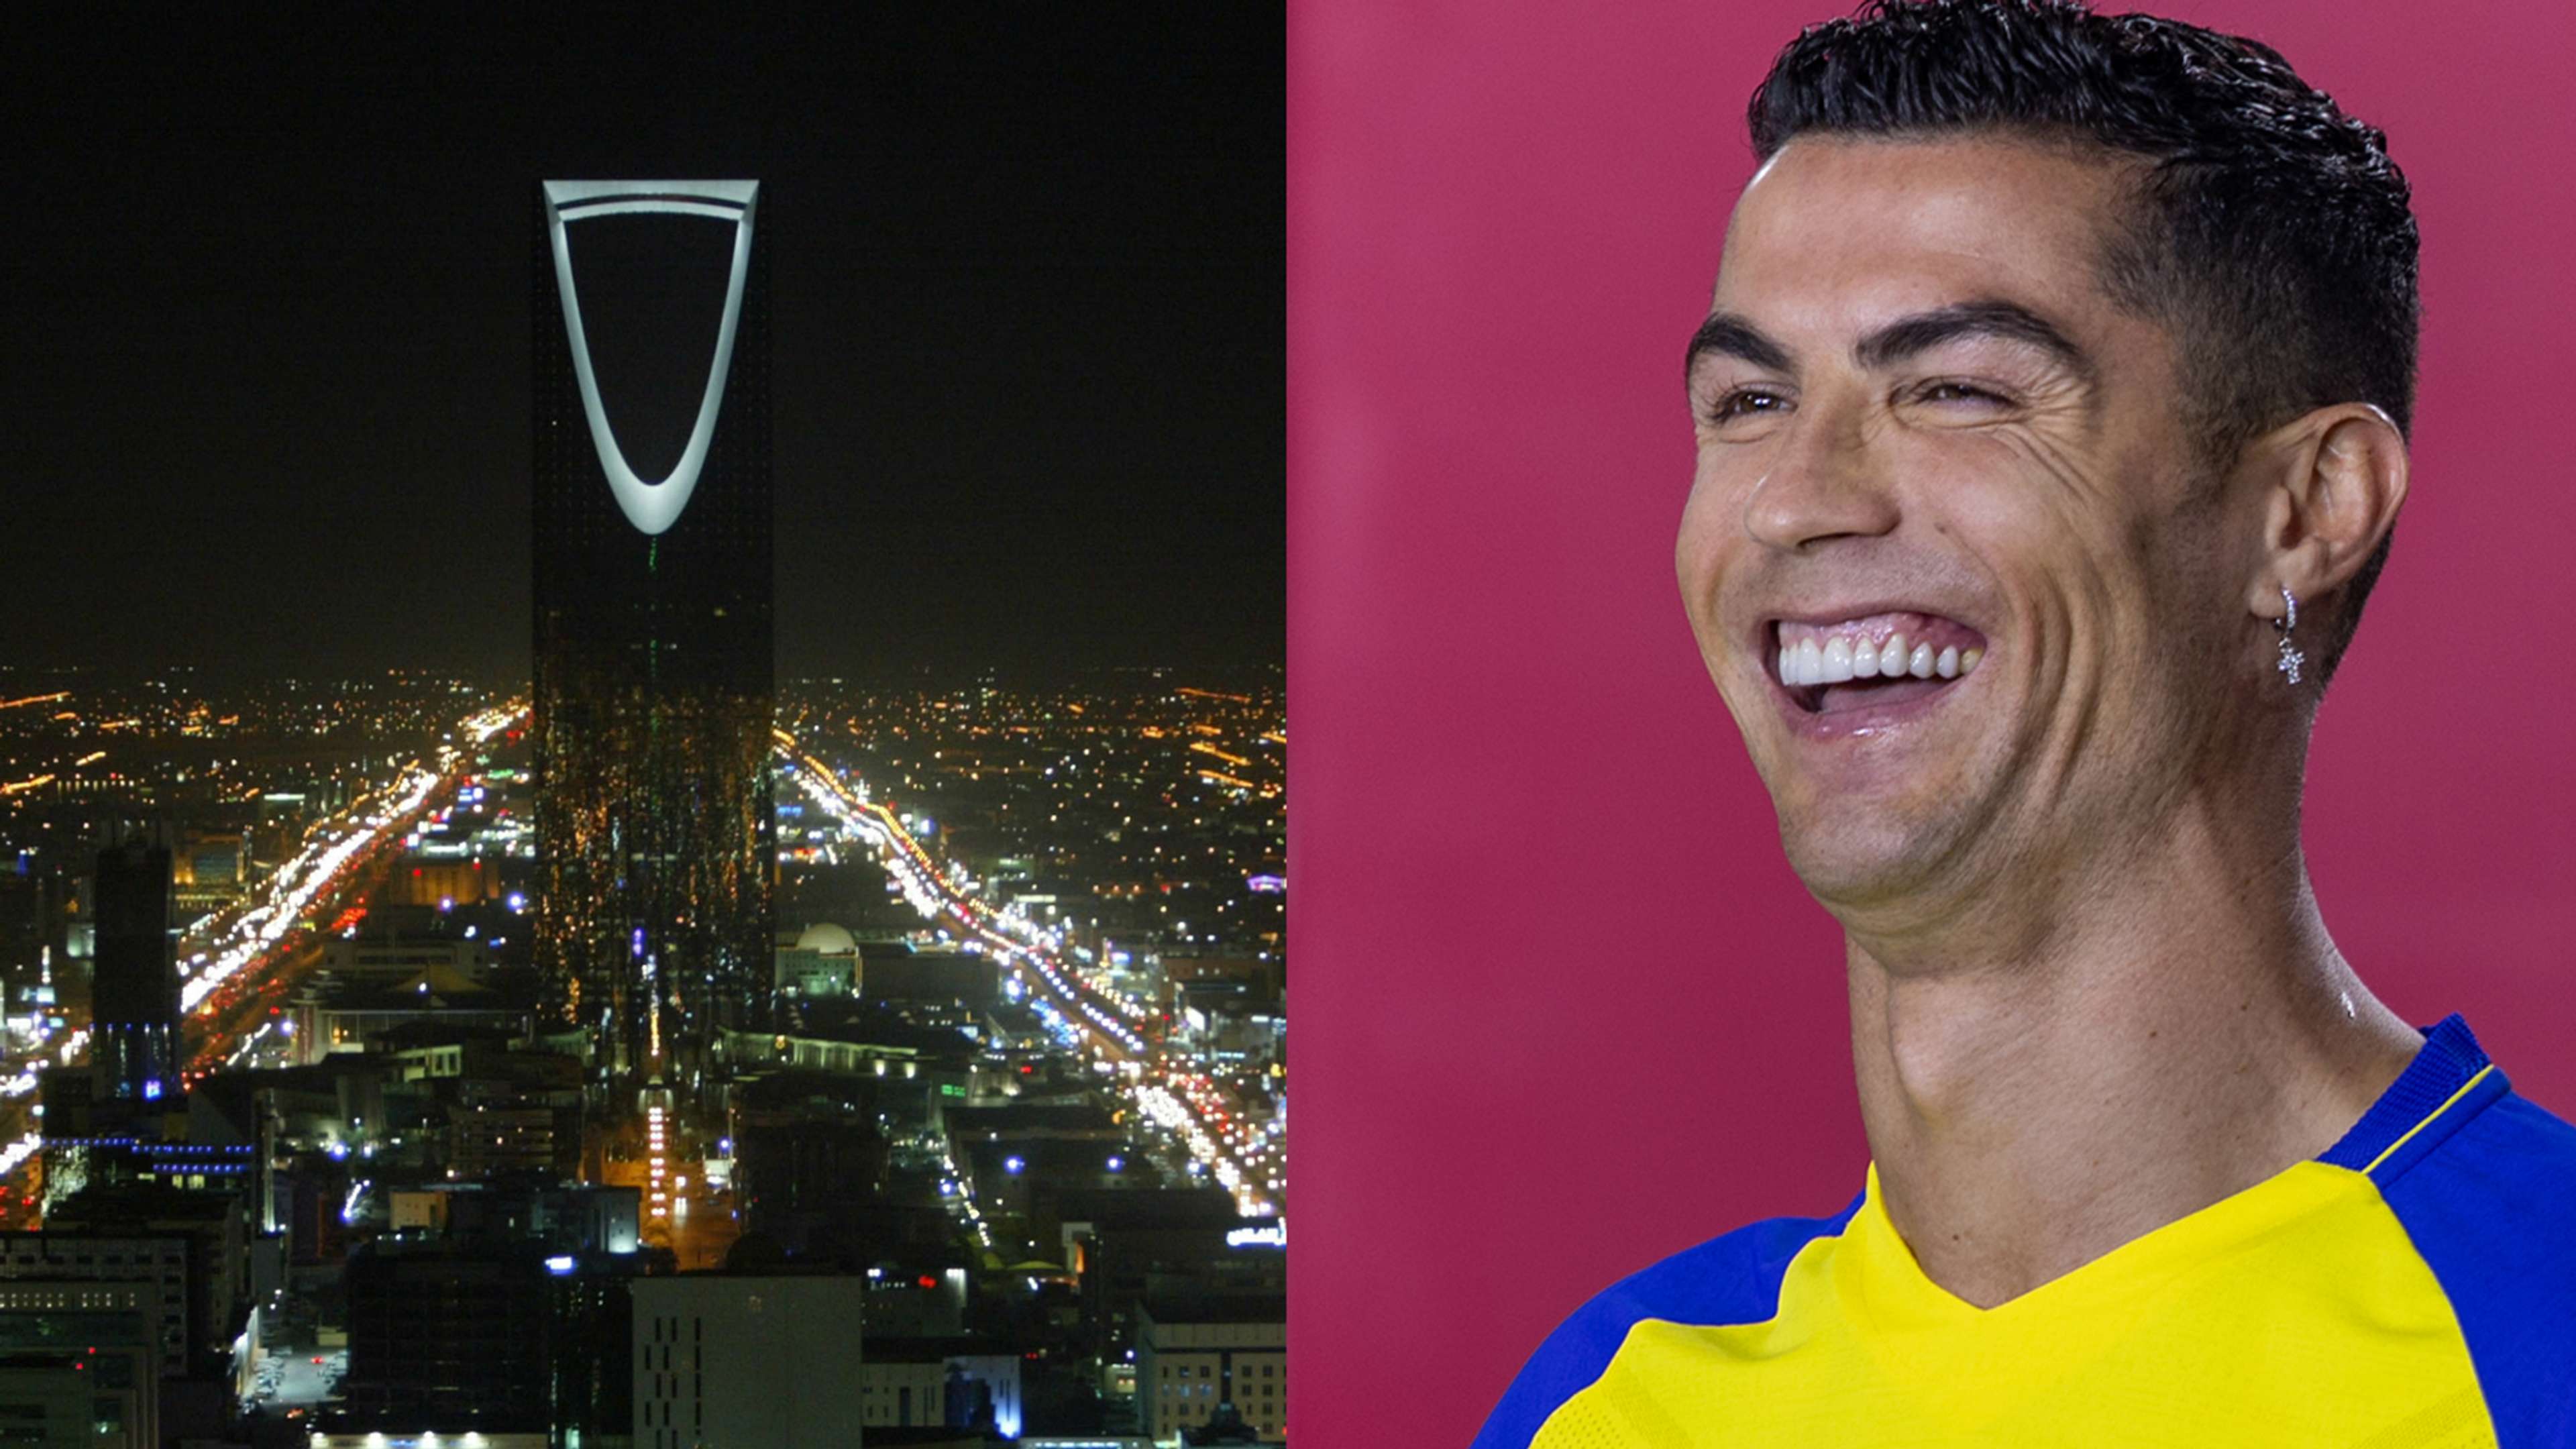 Ronaldo Kingdom Tower